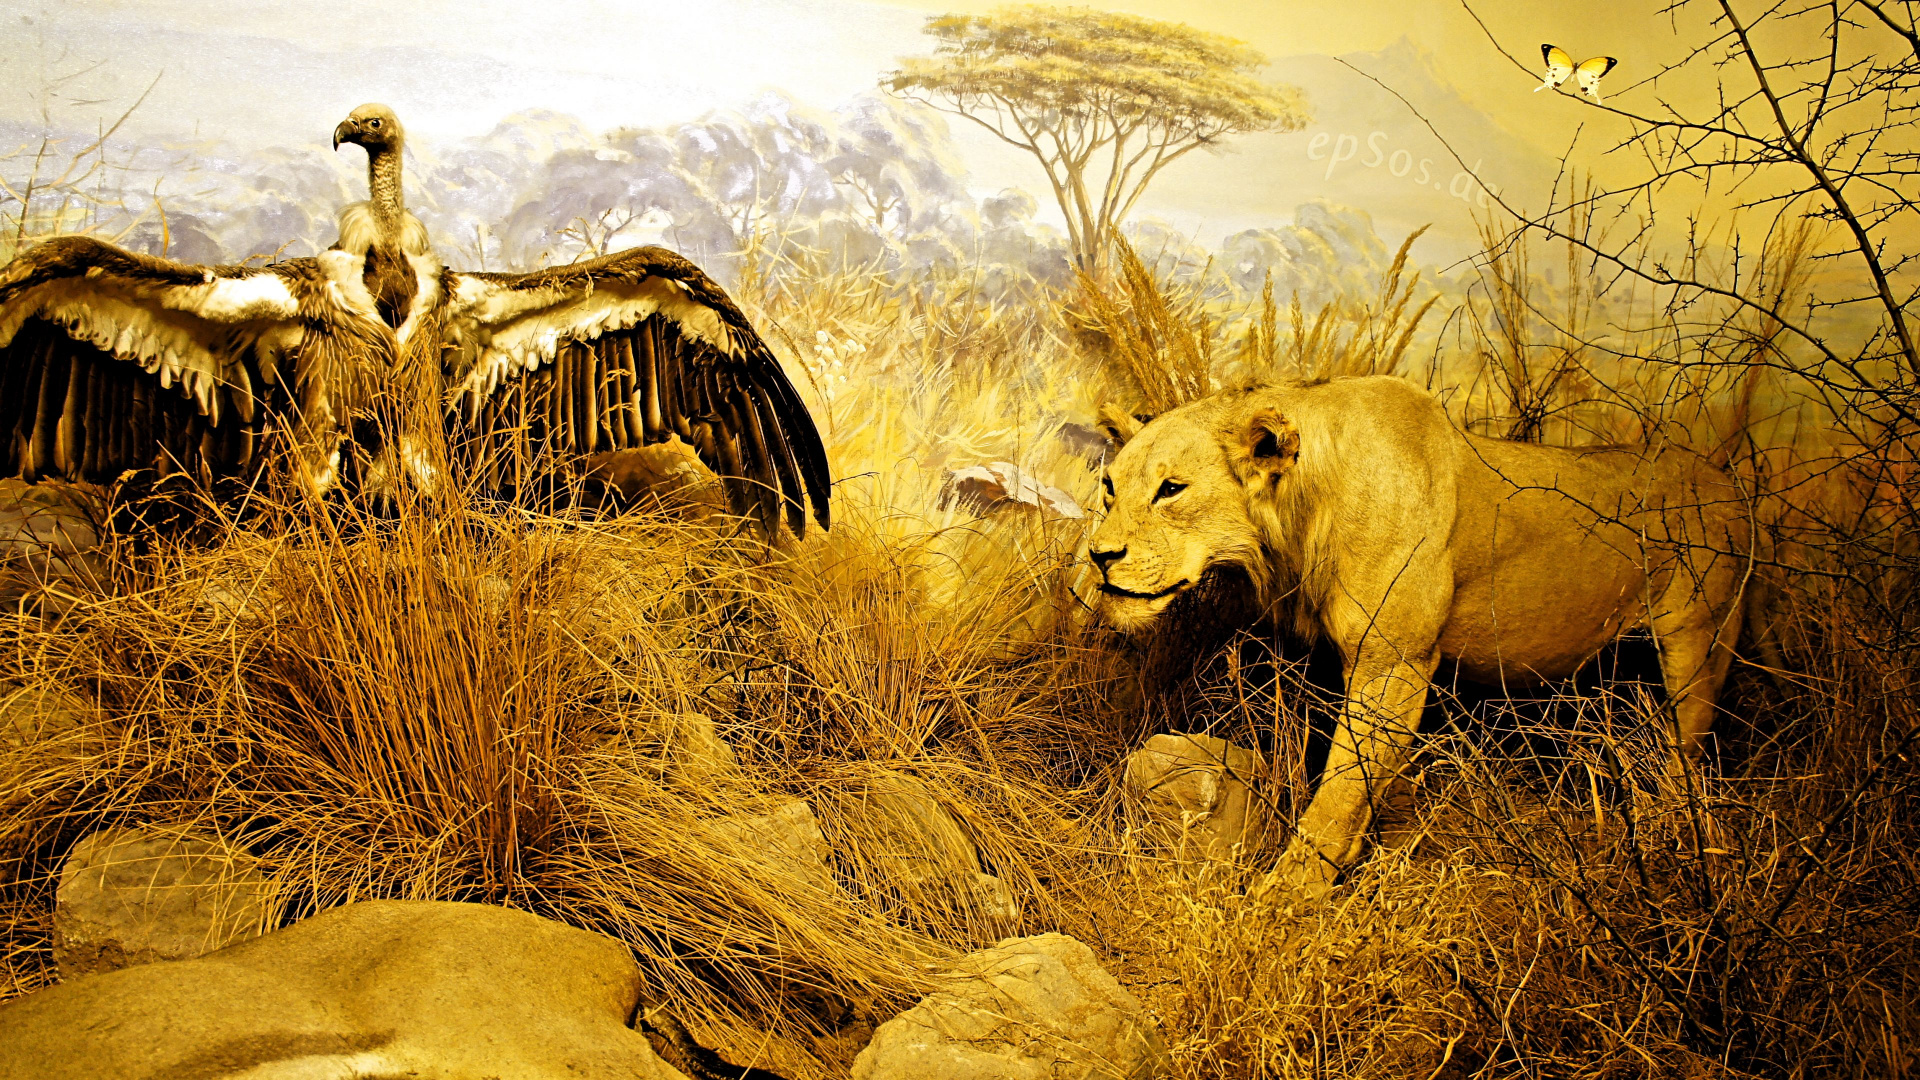 Brown Lion on Brown Grass Field During Daytime. Wallpaper in 1920x1080 Resolution